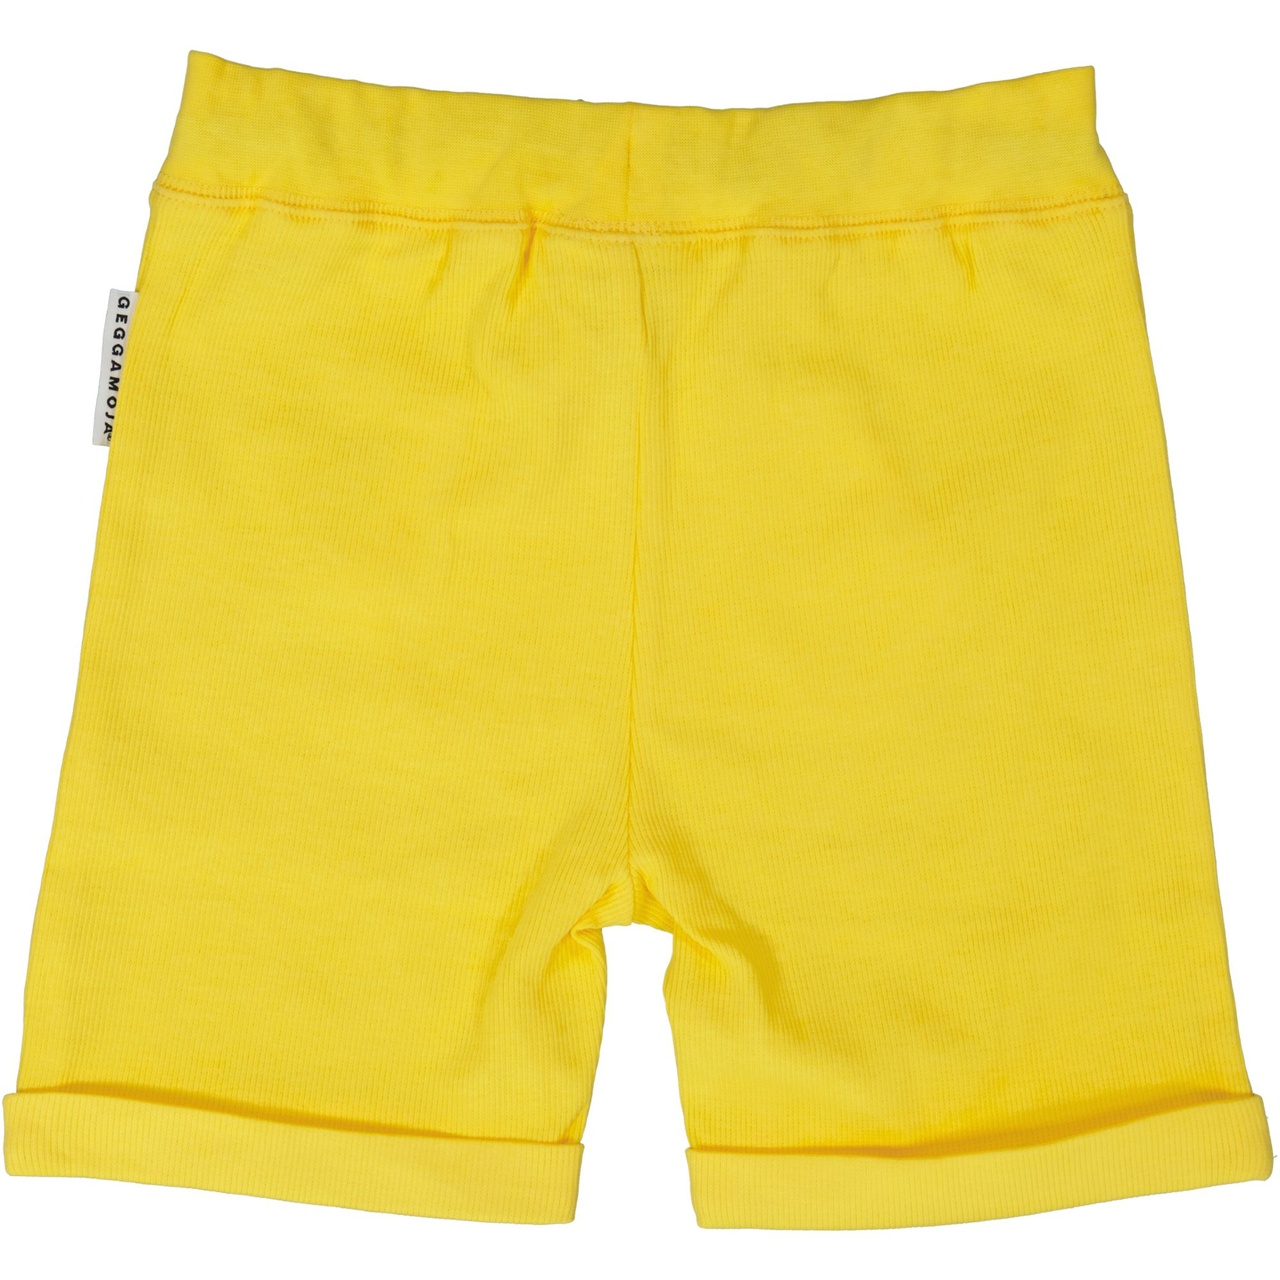 Shorts Yellow  62/68